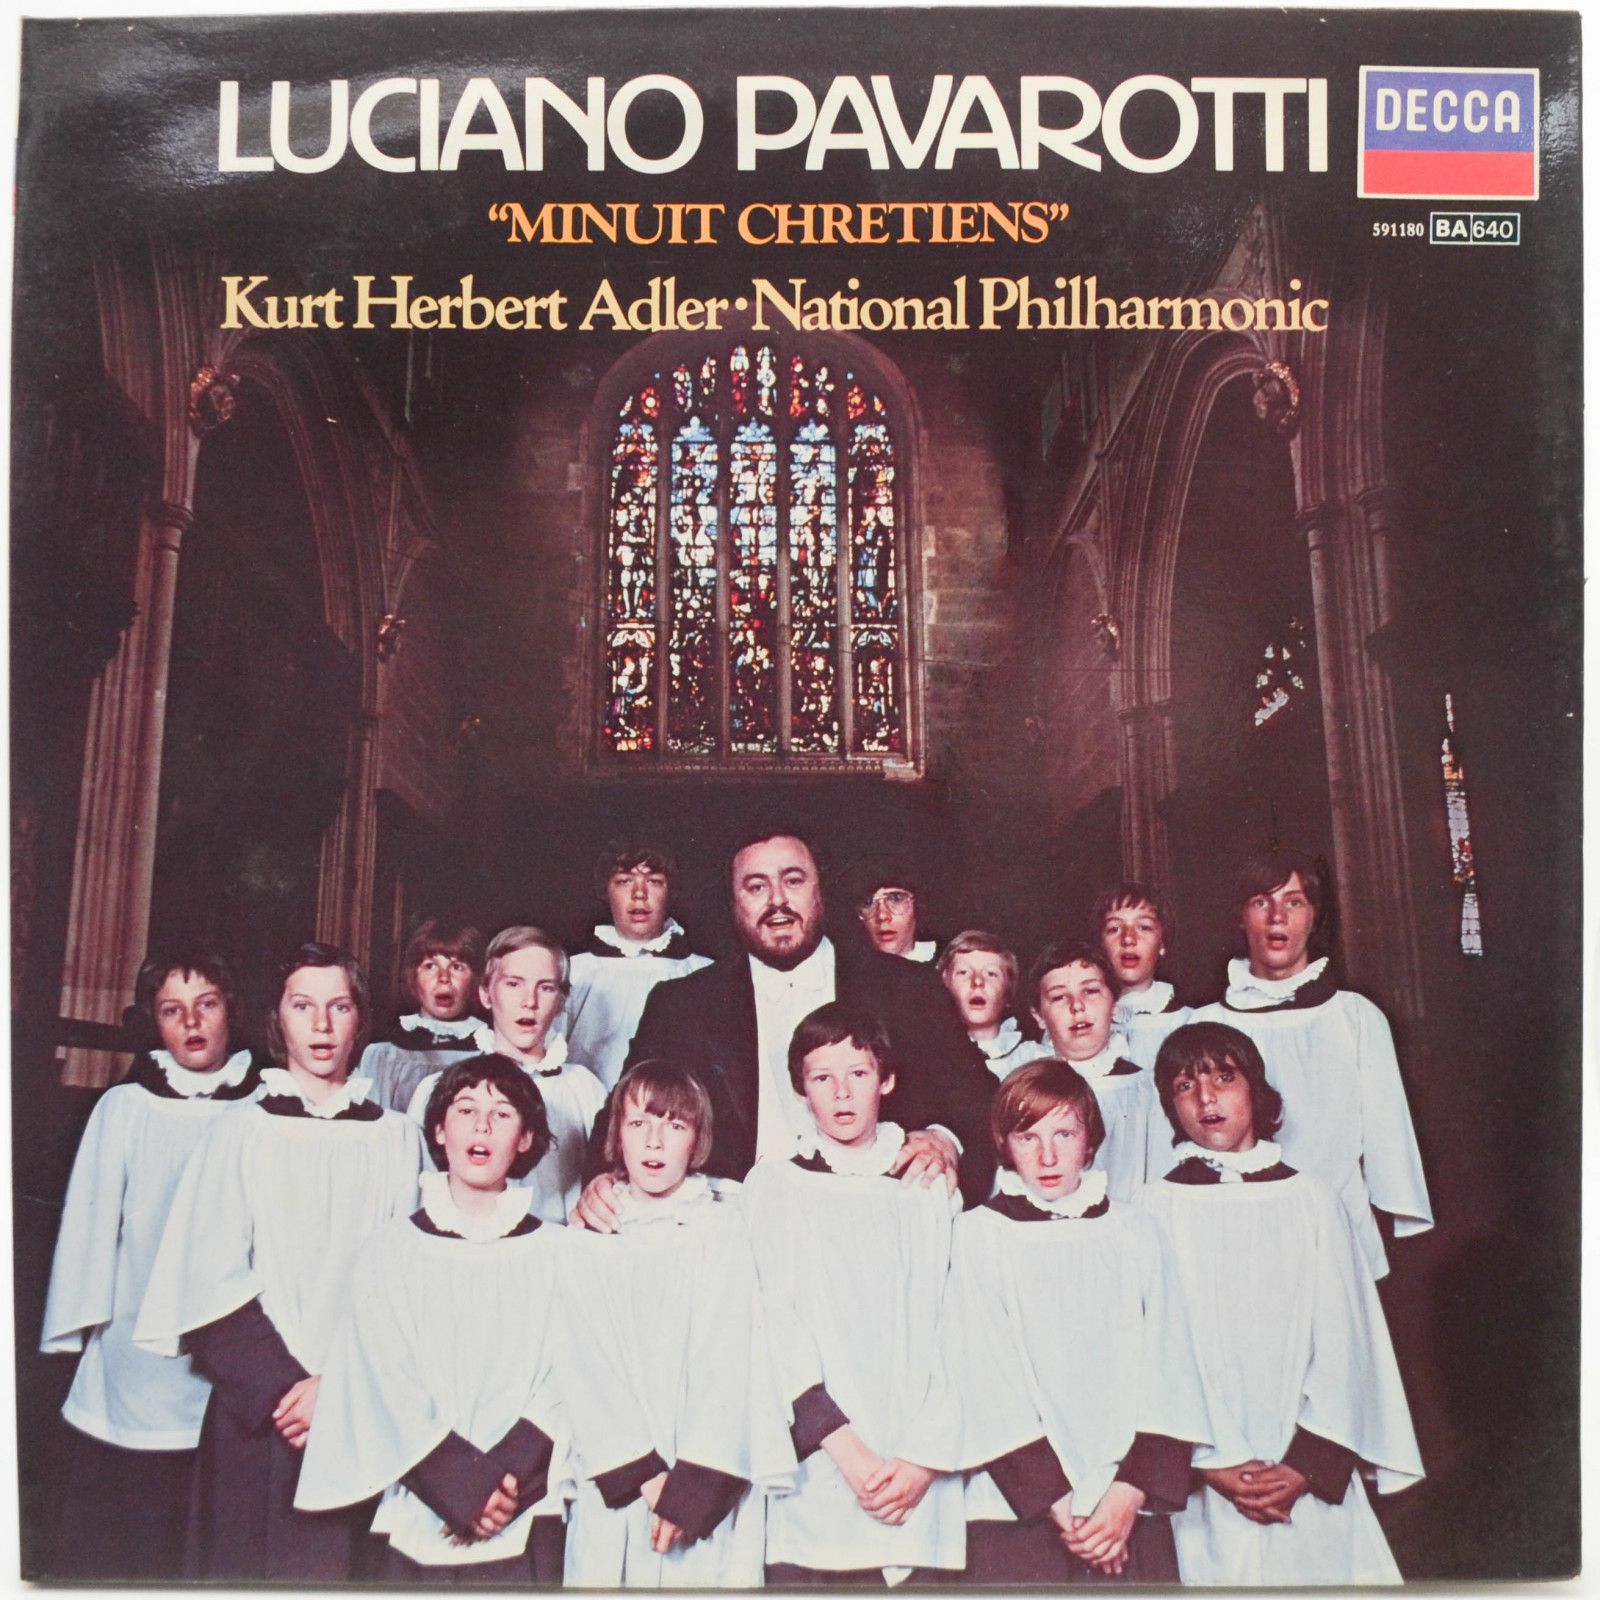 Luciano Pavarotti - Kurt Herbert Adler ● National Philharmonic — "Minuit Chretiens", 1976